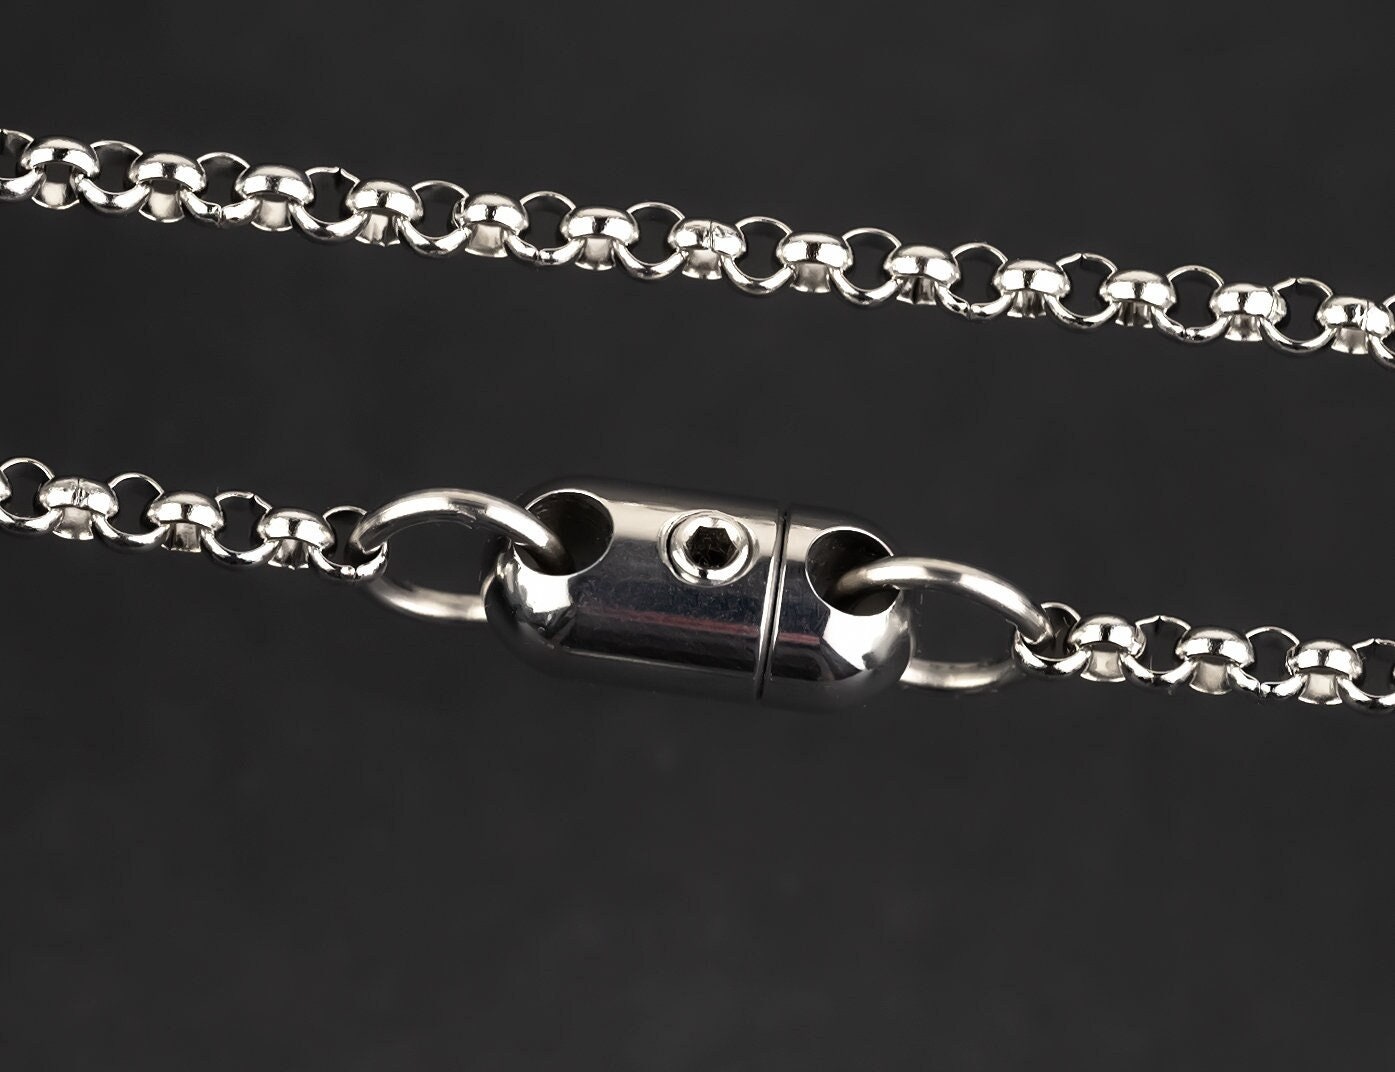 Permanent Jewelry Locks In Customers, Sets Off Metal Detectors - WSJ